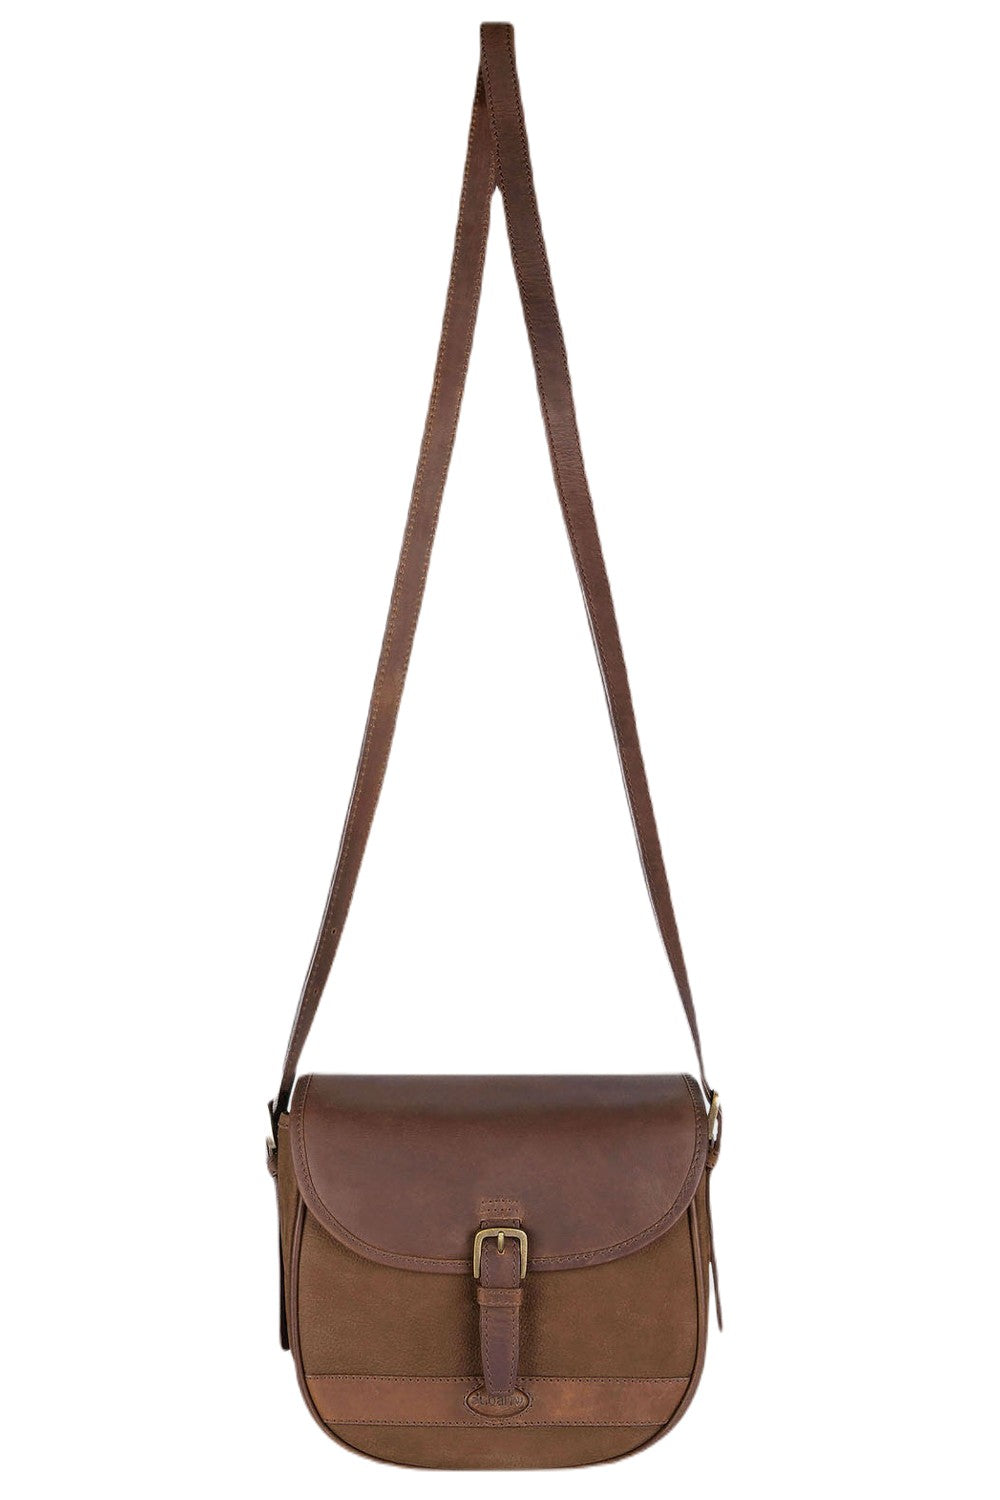 Dubarry Clara Leather Saddle Bag in Walnut